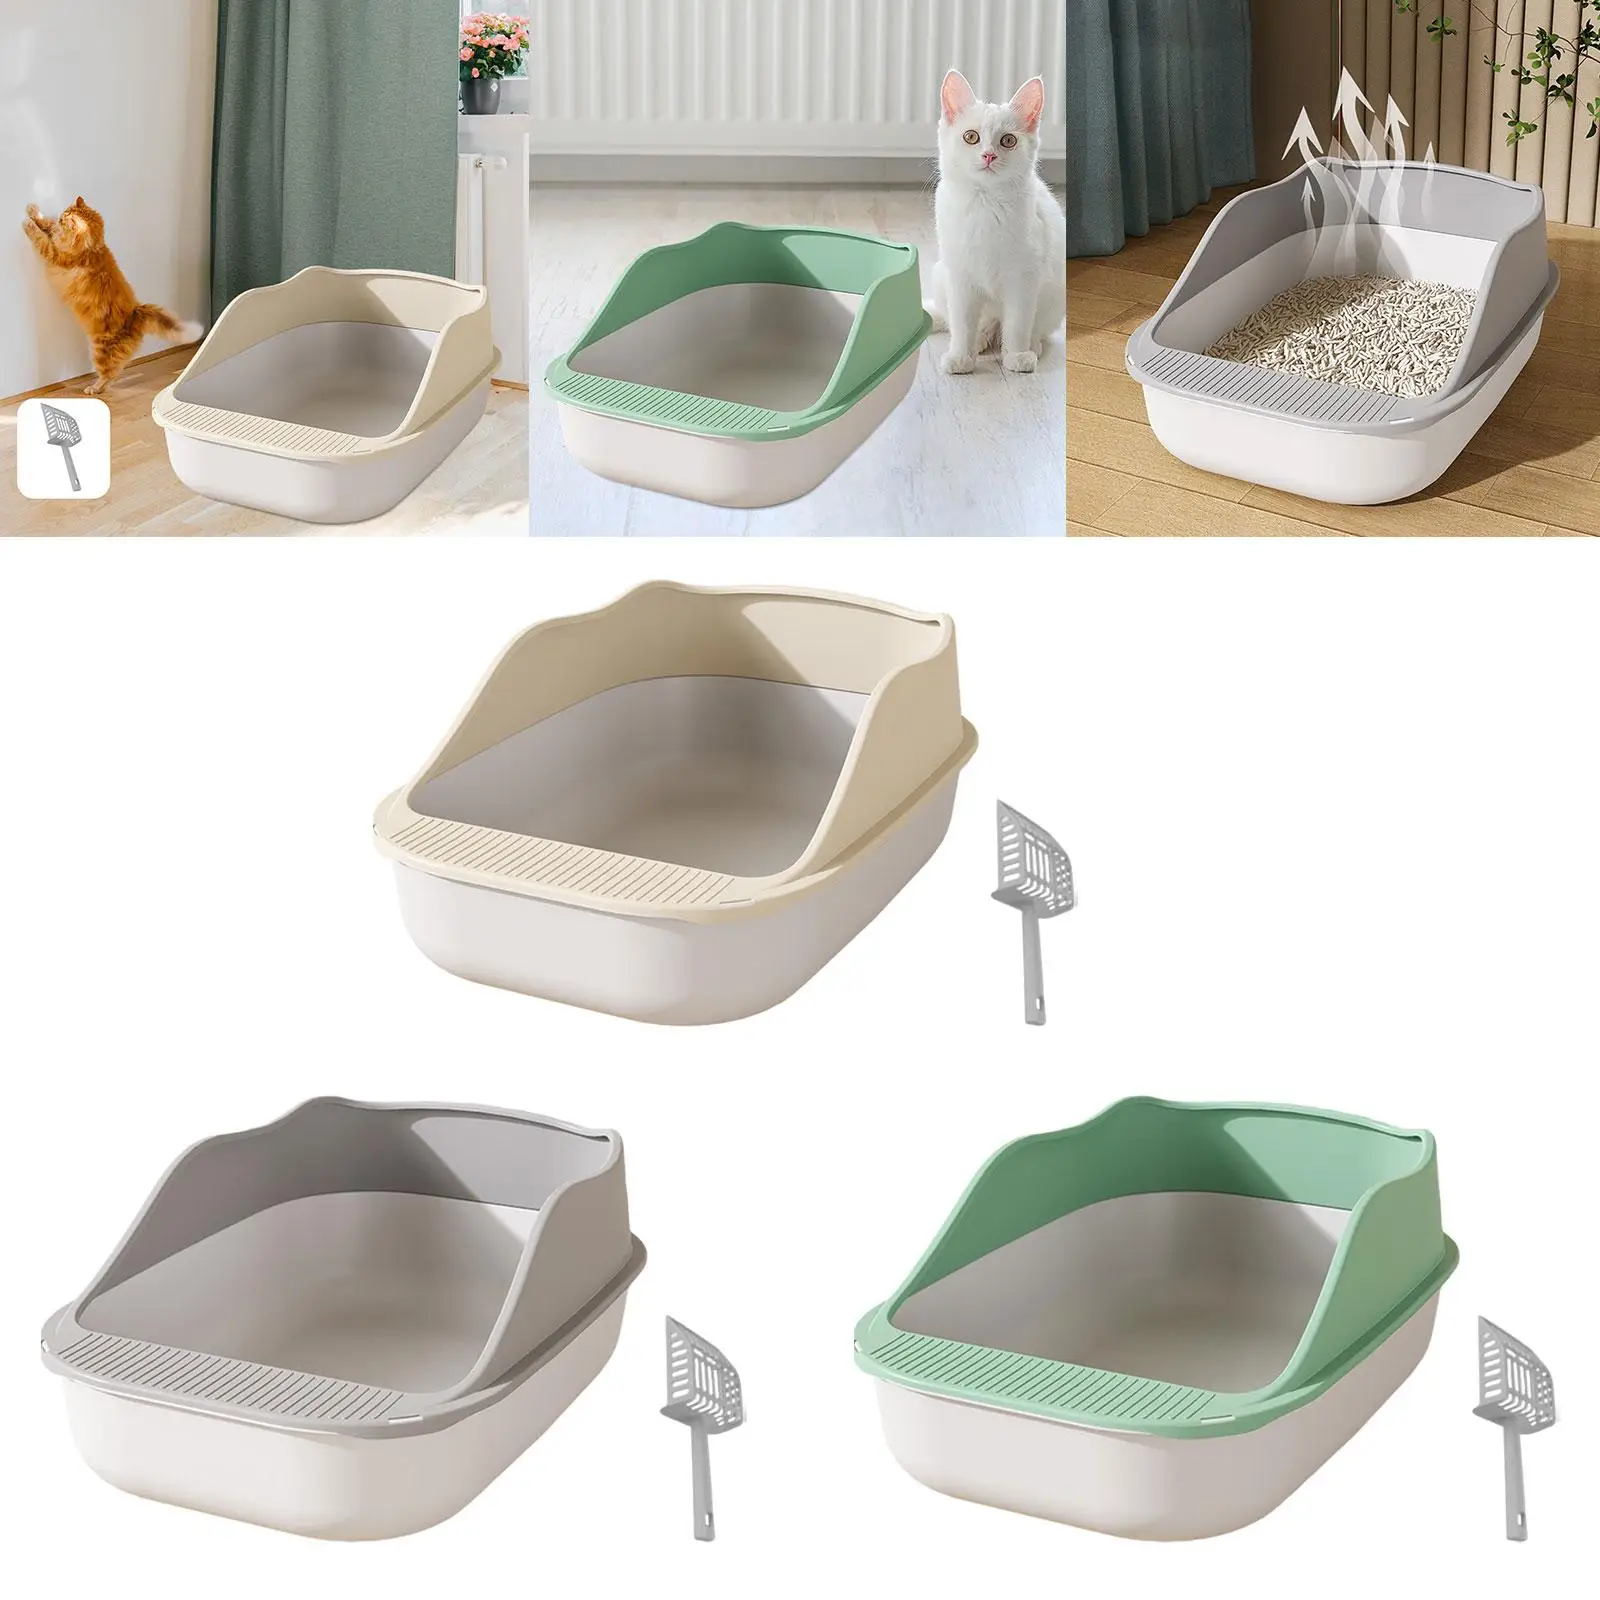 Cat Litter Box Easy Cleaning Litter Pan Anti Splashing Detachable Cat Toilet